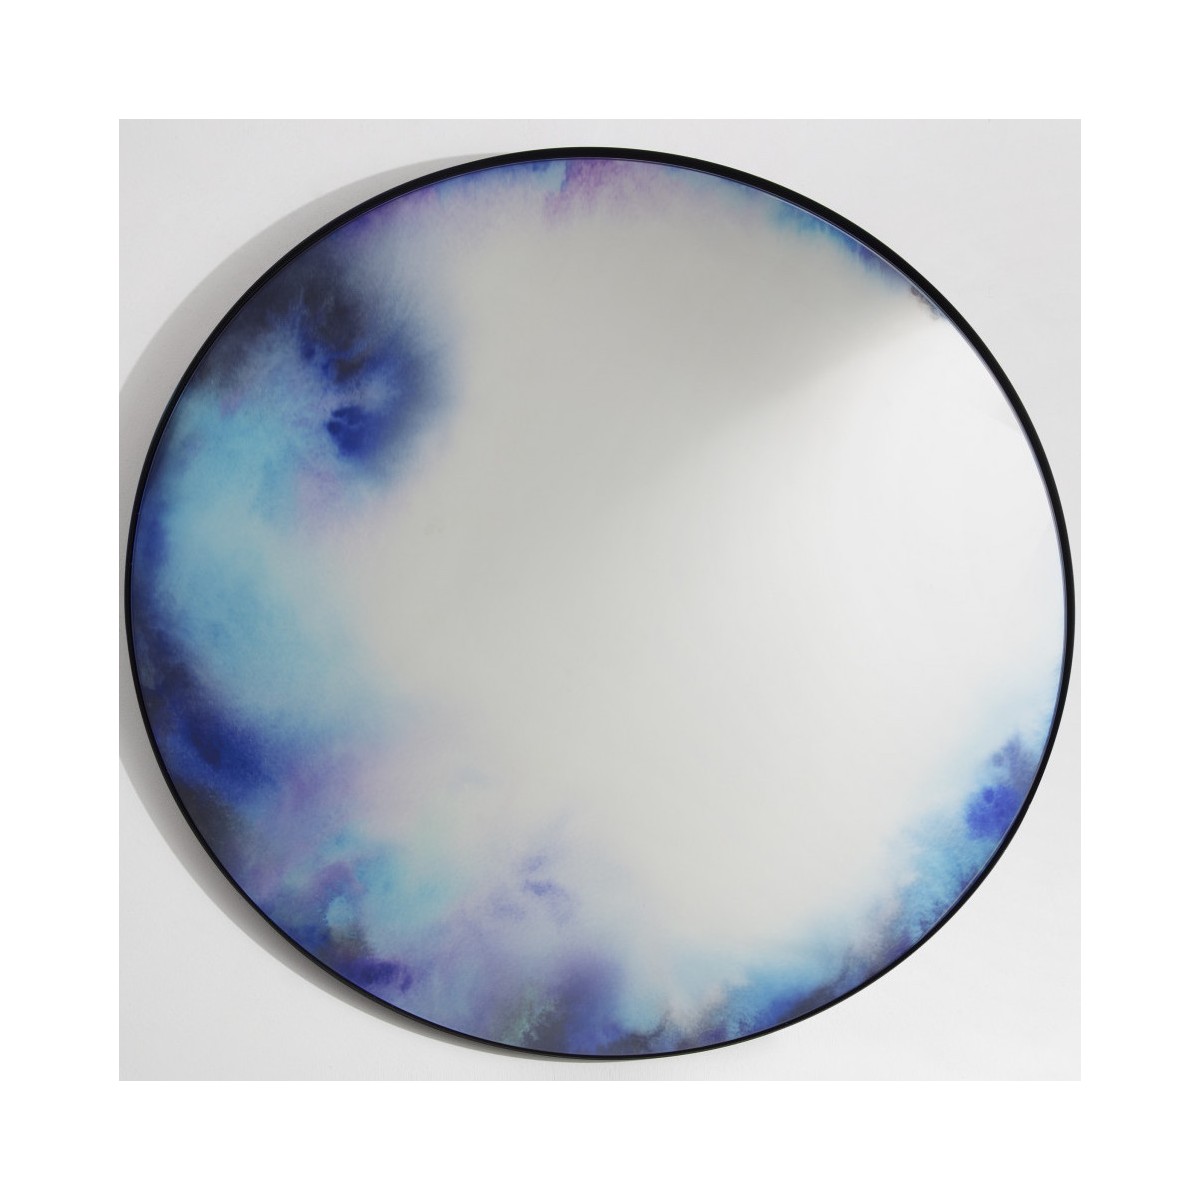 extra-large Francis mirror - blue & purple